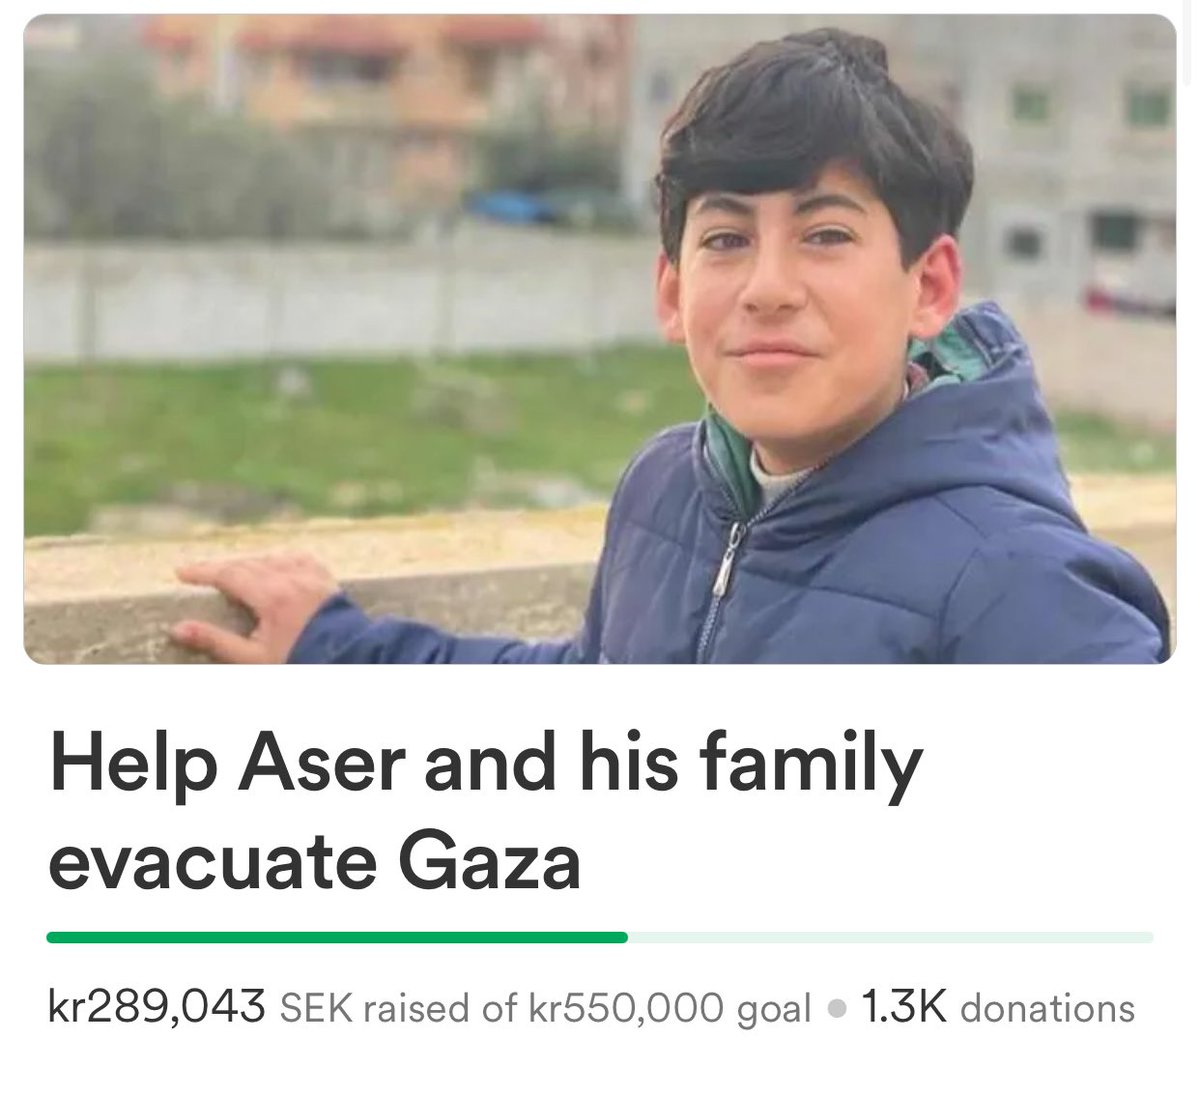 🆘‼️URGENT! Please can we help fulfill Jenin’s goal so she and her family can evacuate Gaza? নিরাপত্তার জন্য জেনিন এবং তার পরিবারকে গাজা ছেড়ে যেতে সাহায্য করুন! 👉 GMF; gofund.me/6aeeca24